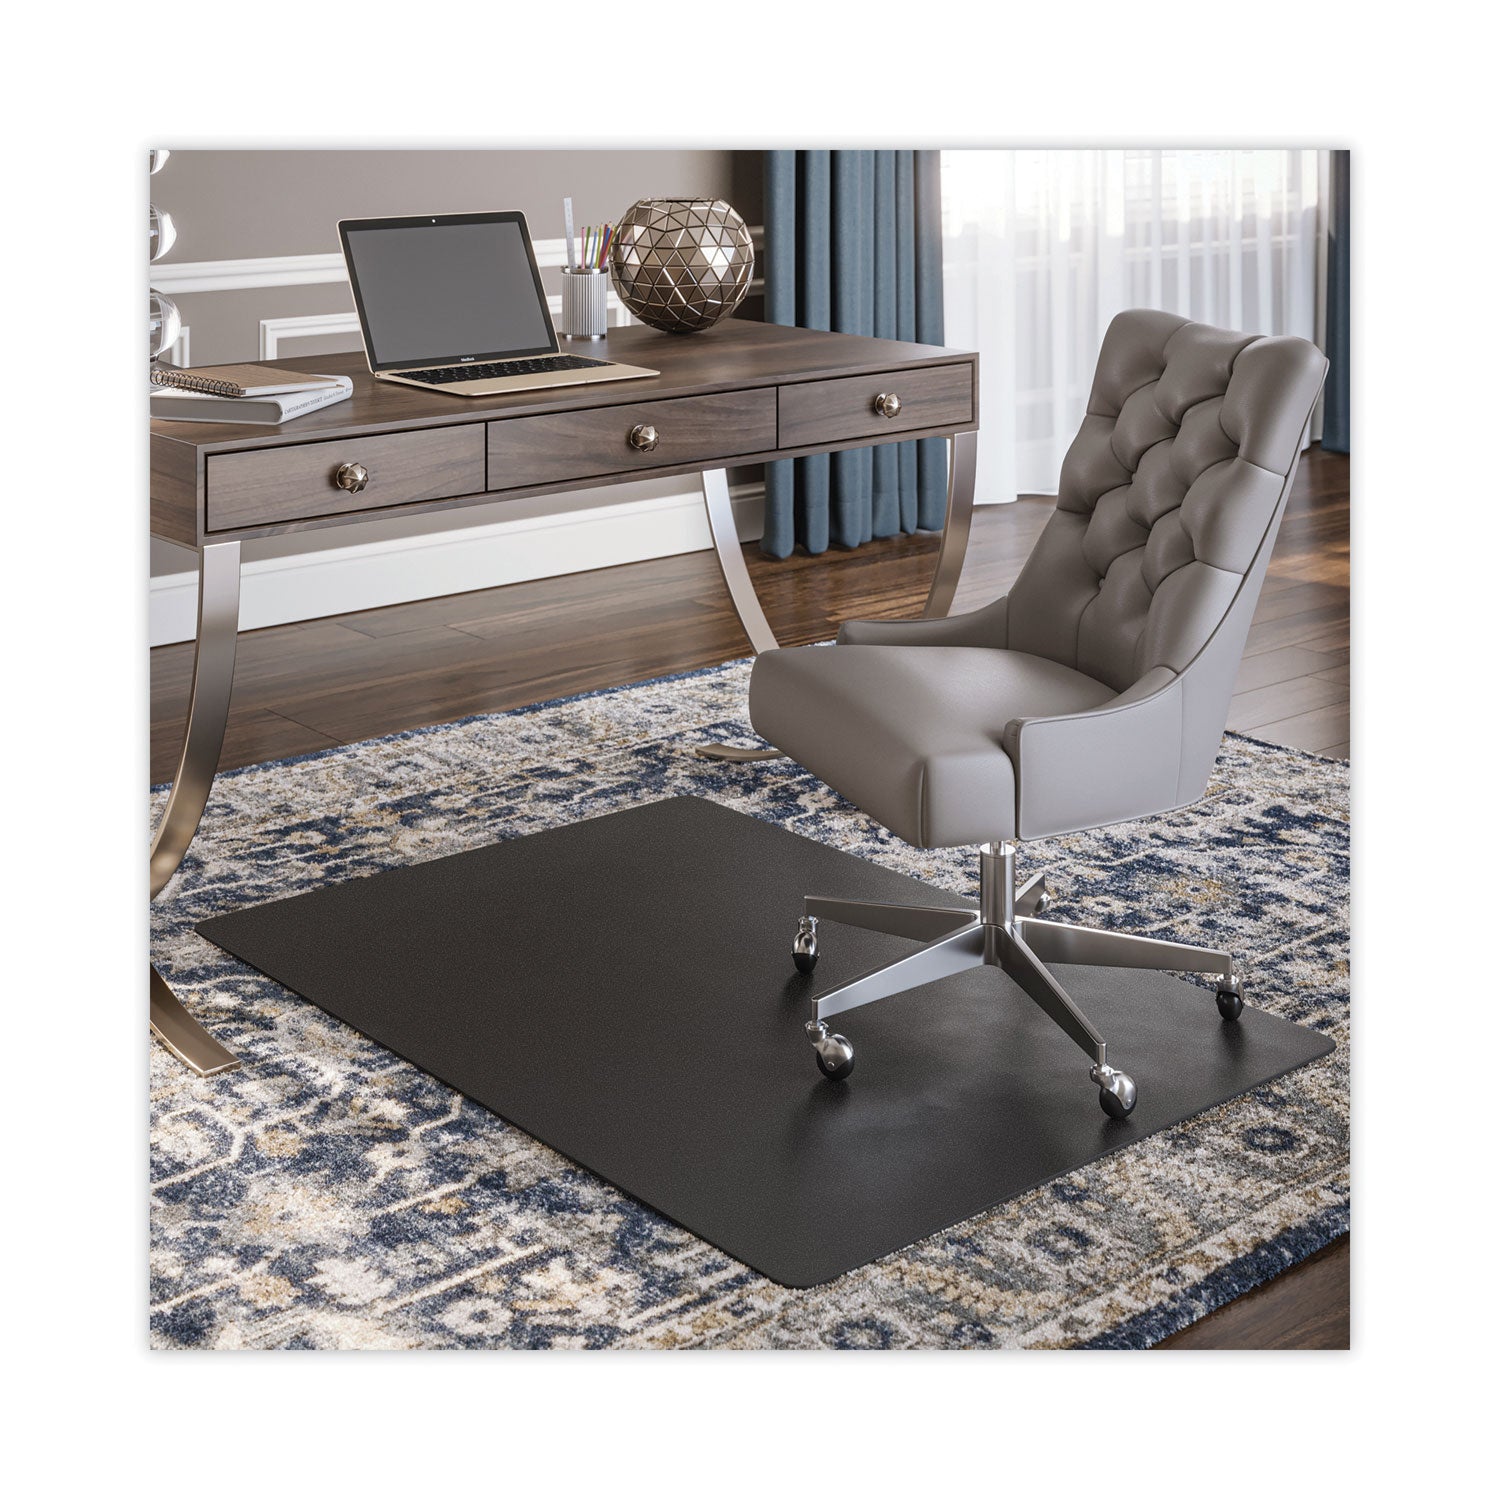 SuperMat Frequent Use Chair Mat for Medium Pile Carpet, 45 x 53, Rectangular, Black - 